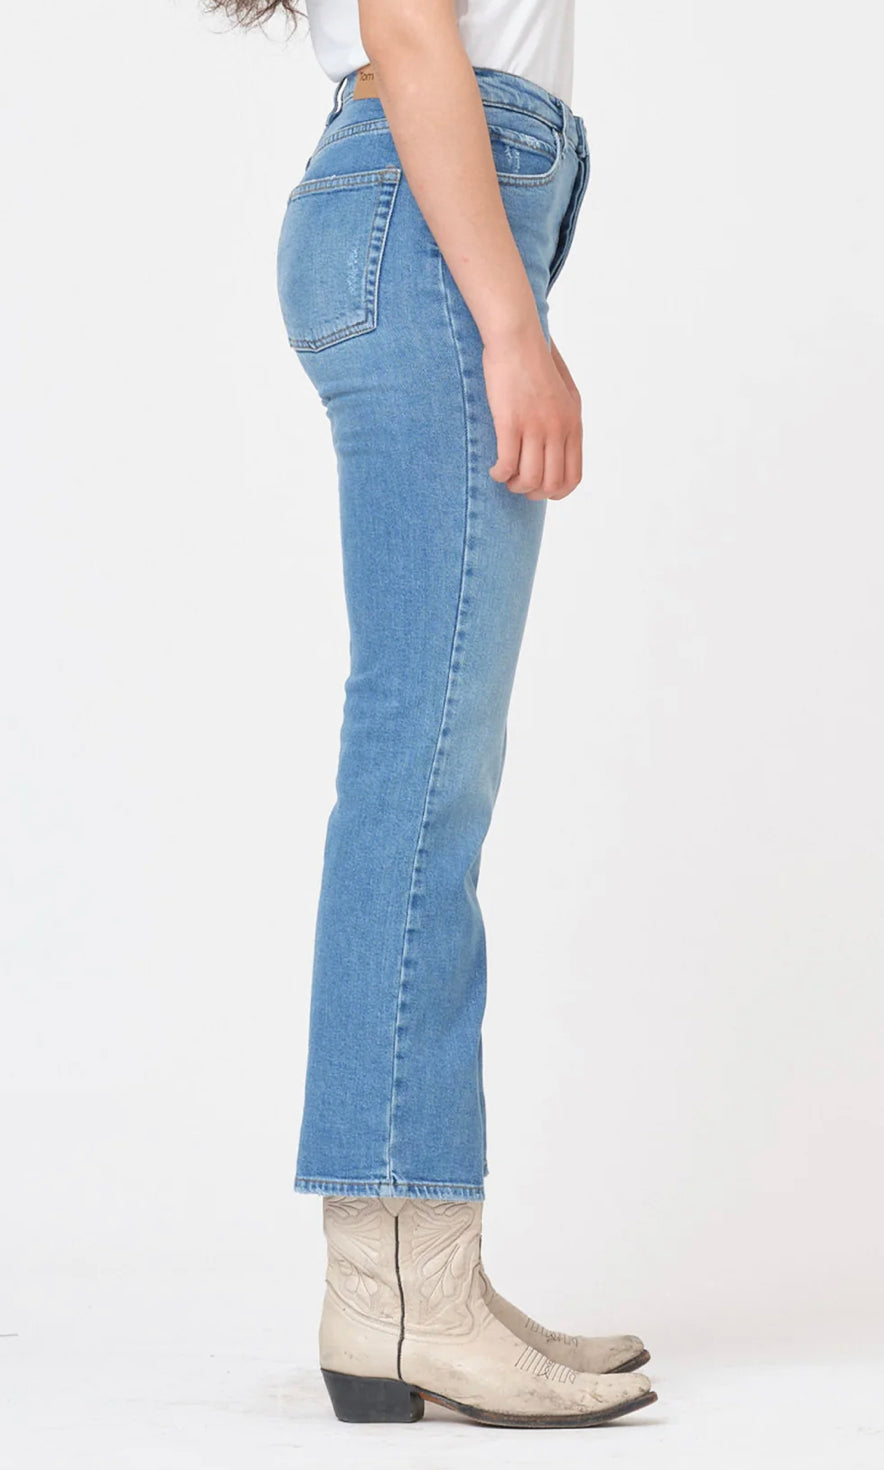 Marston jeans